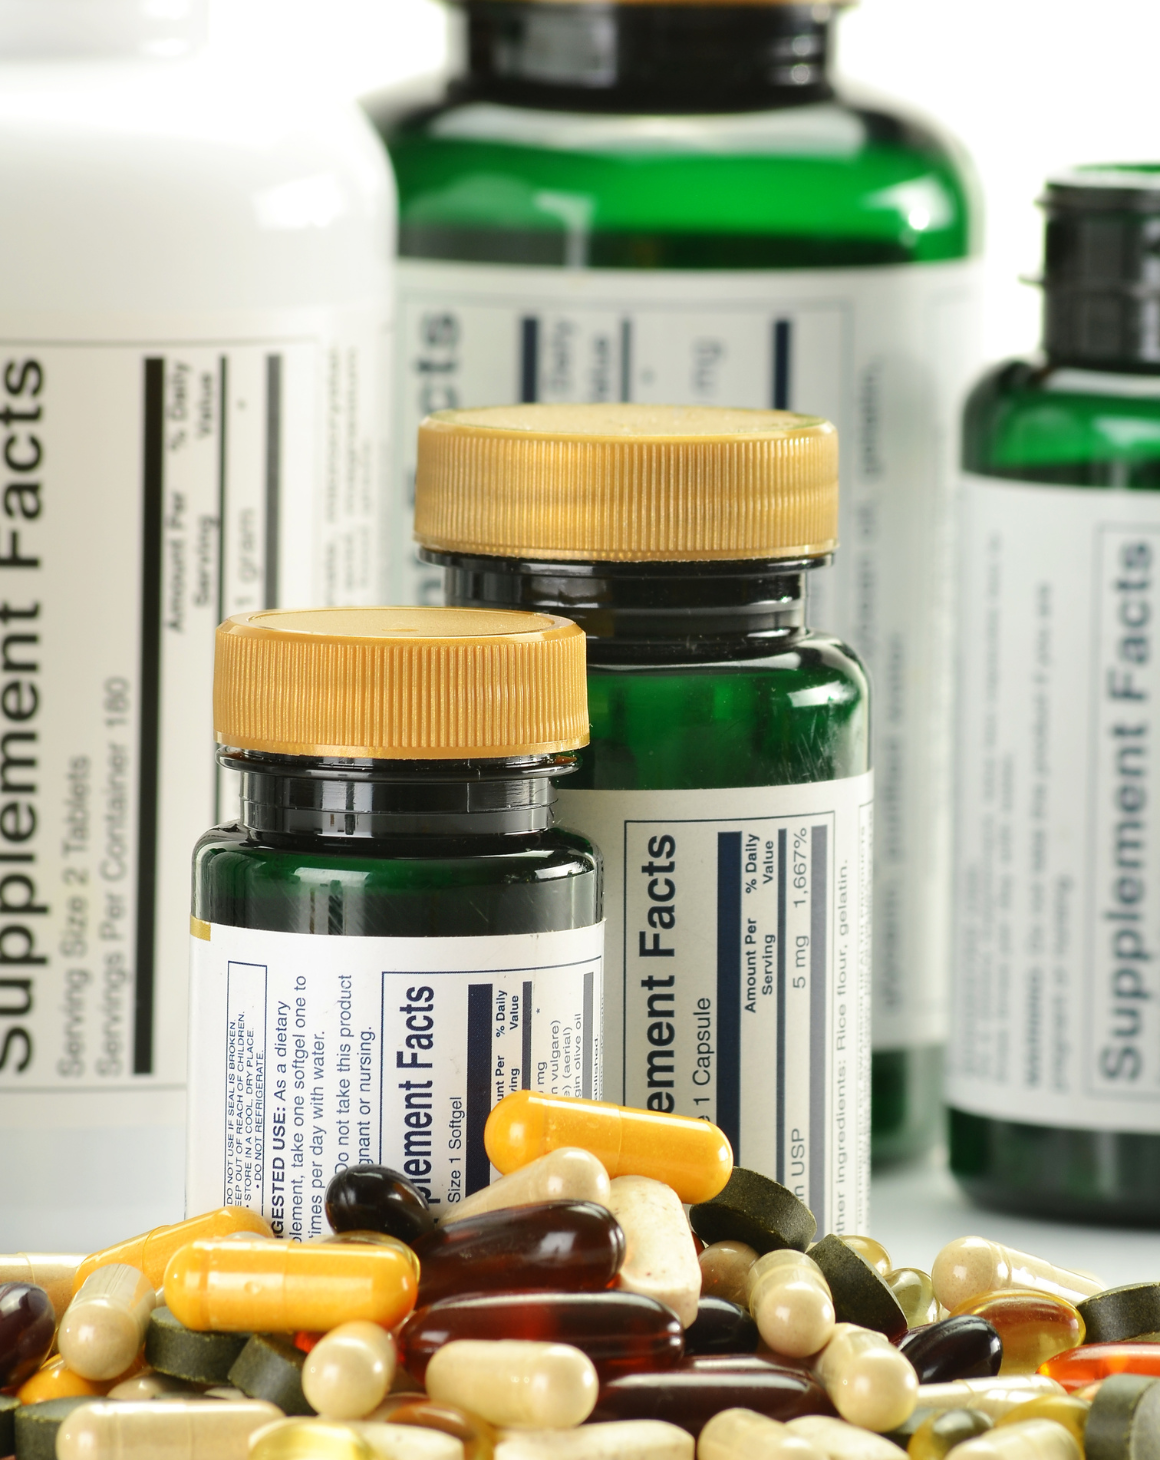 vitamins + bottles showing supplement facts